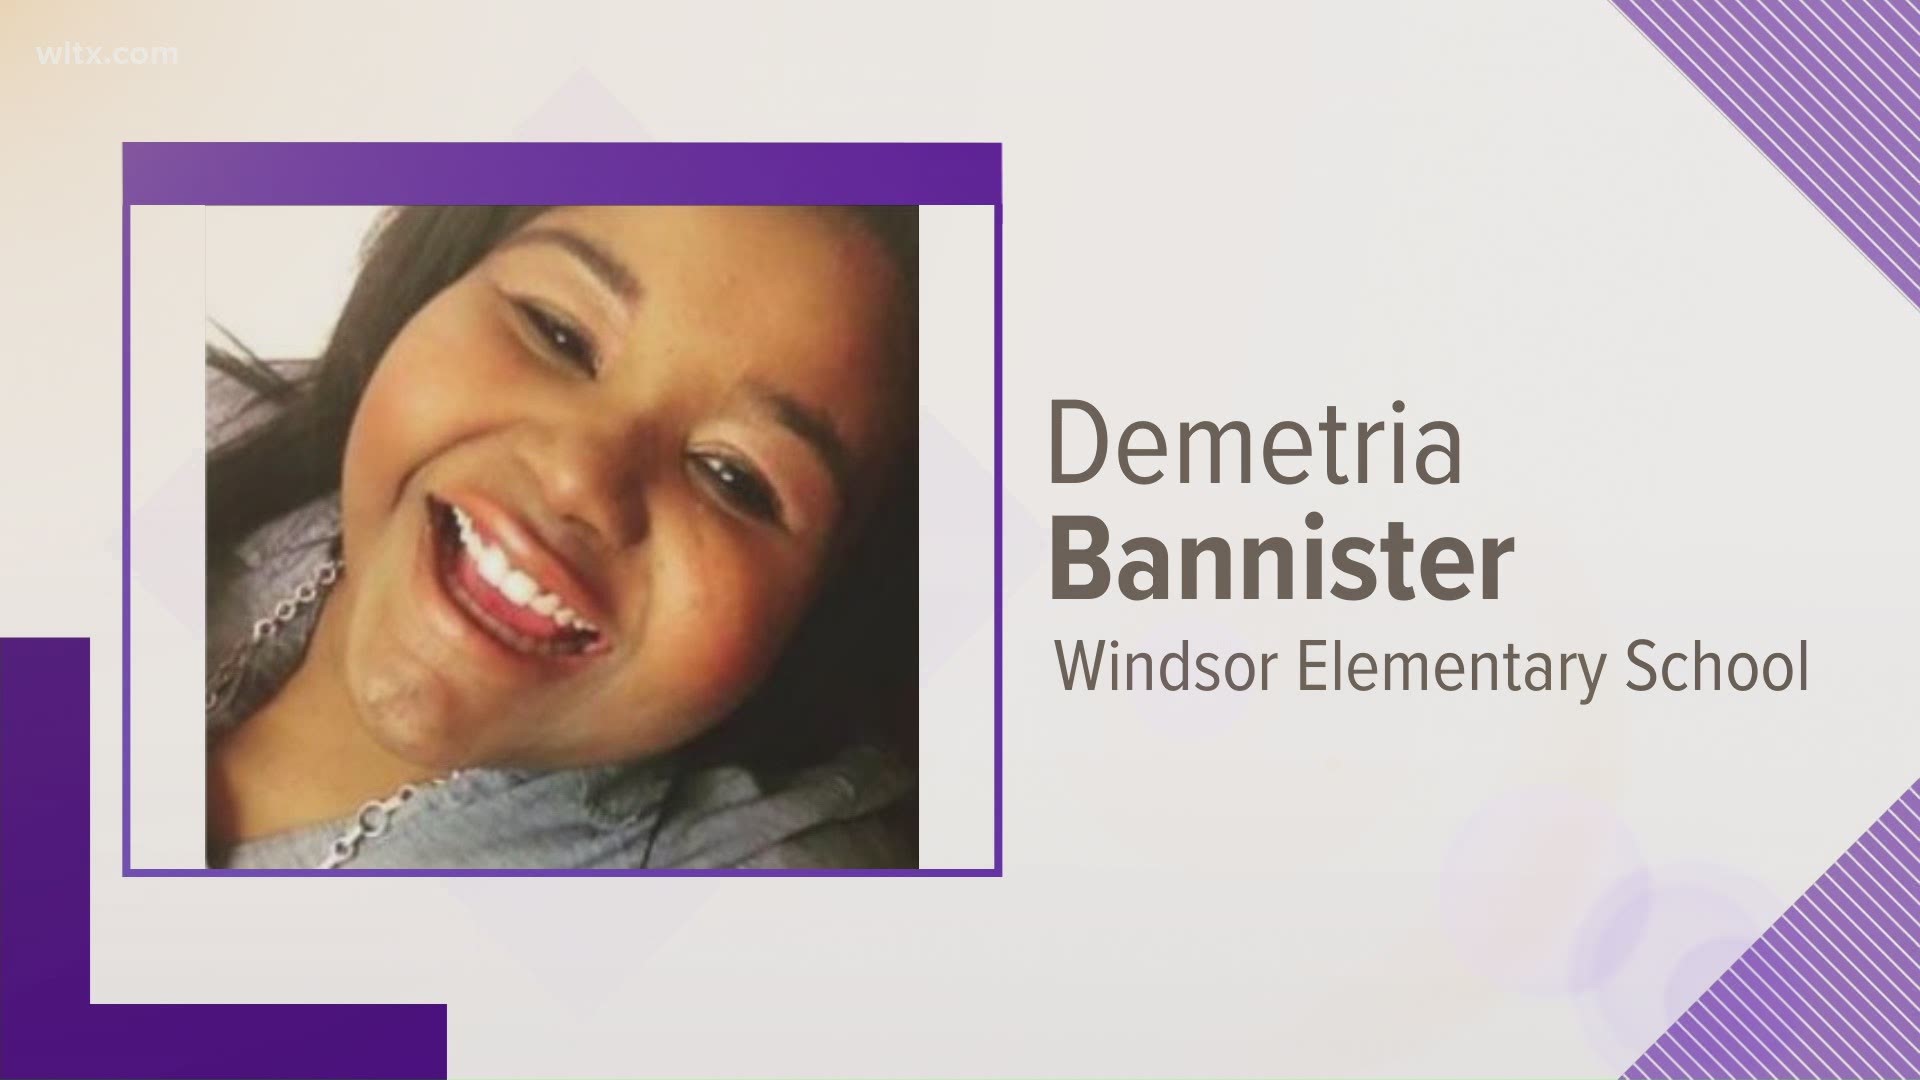 Demetria 'Demi' Bannister taught at Windsor Elementary School.